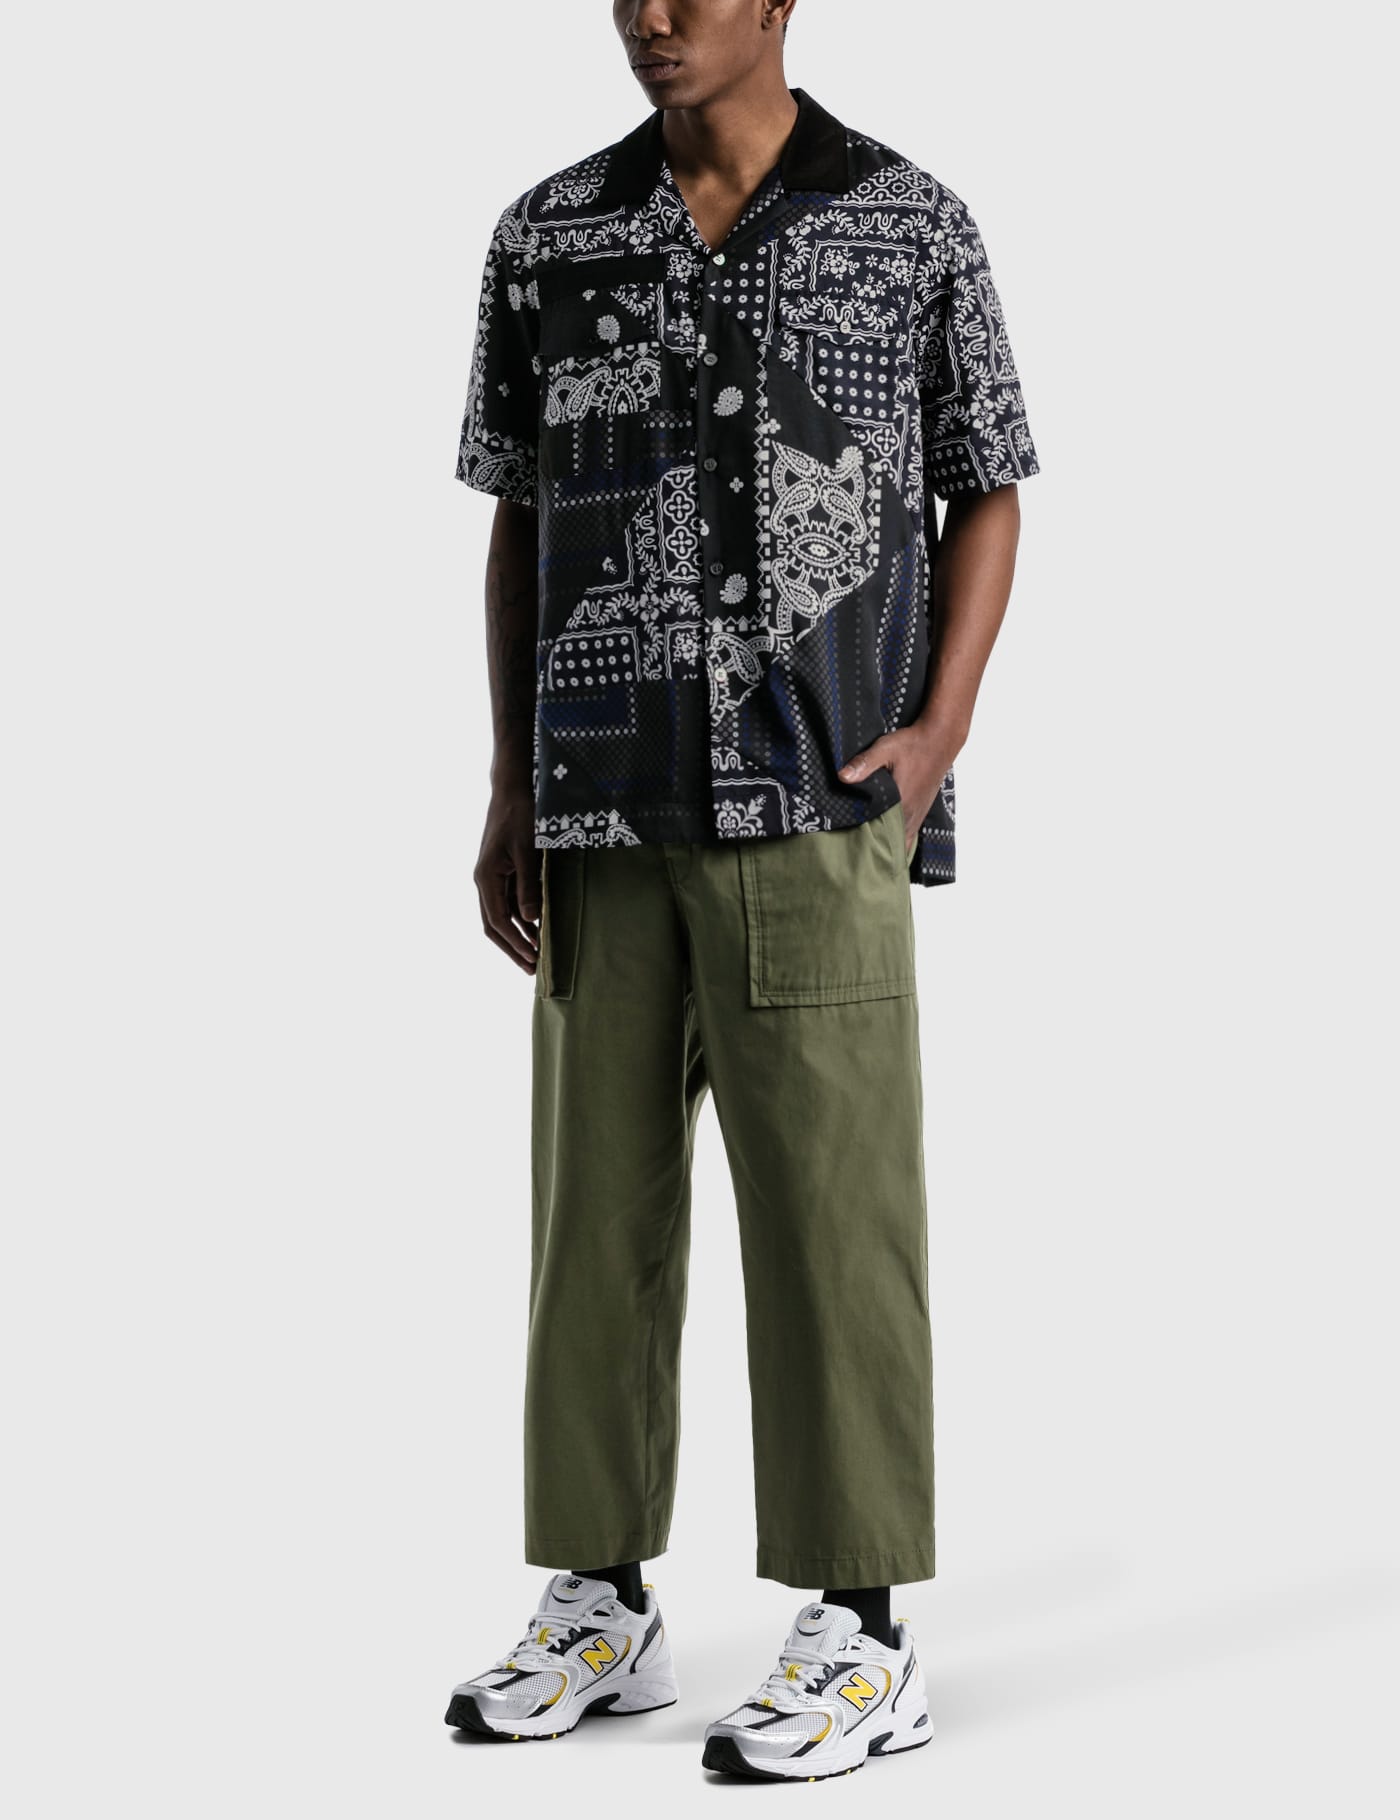 Sacai - Sacai x Hank Willis Thomas Archive E Print Mix Shirt | HBX -  Globally Curated Fashion and Lifestyle by Hypebeast